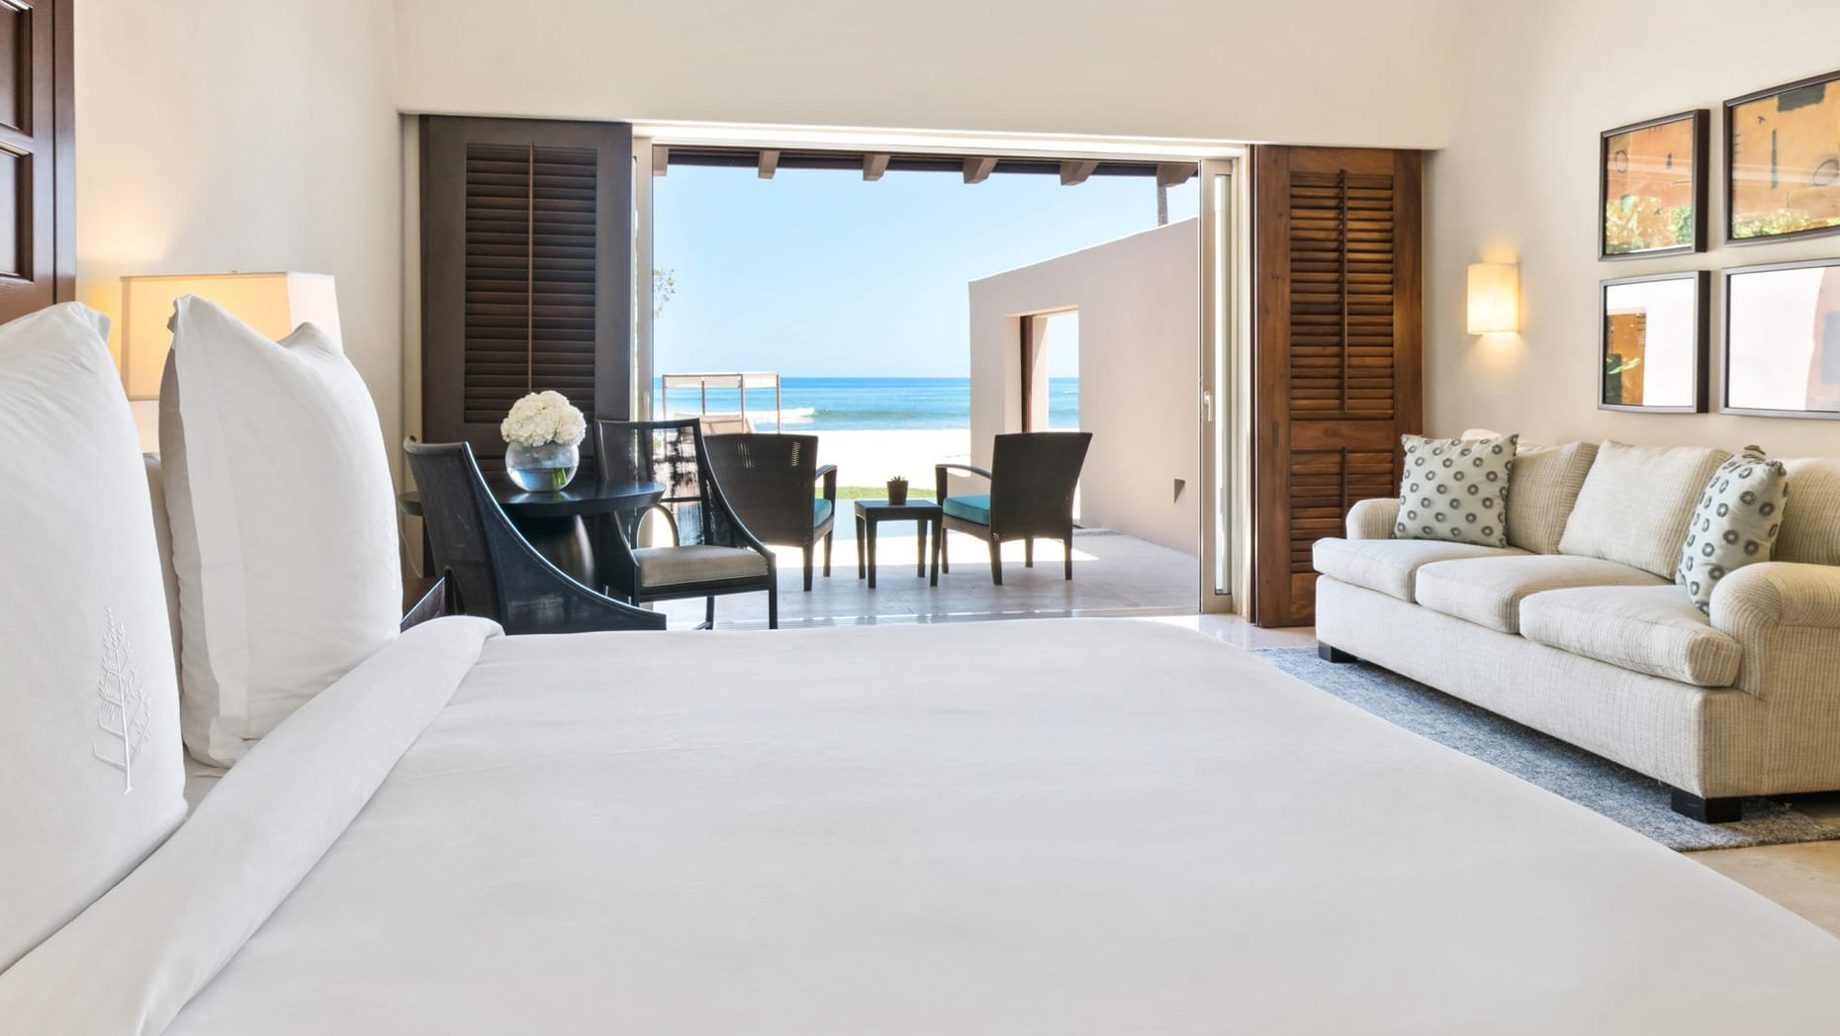 Four Seasons Resort Punta Mita – Nayarit, Mexico – Coral Beach House Bedroom View